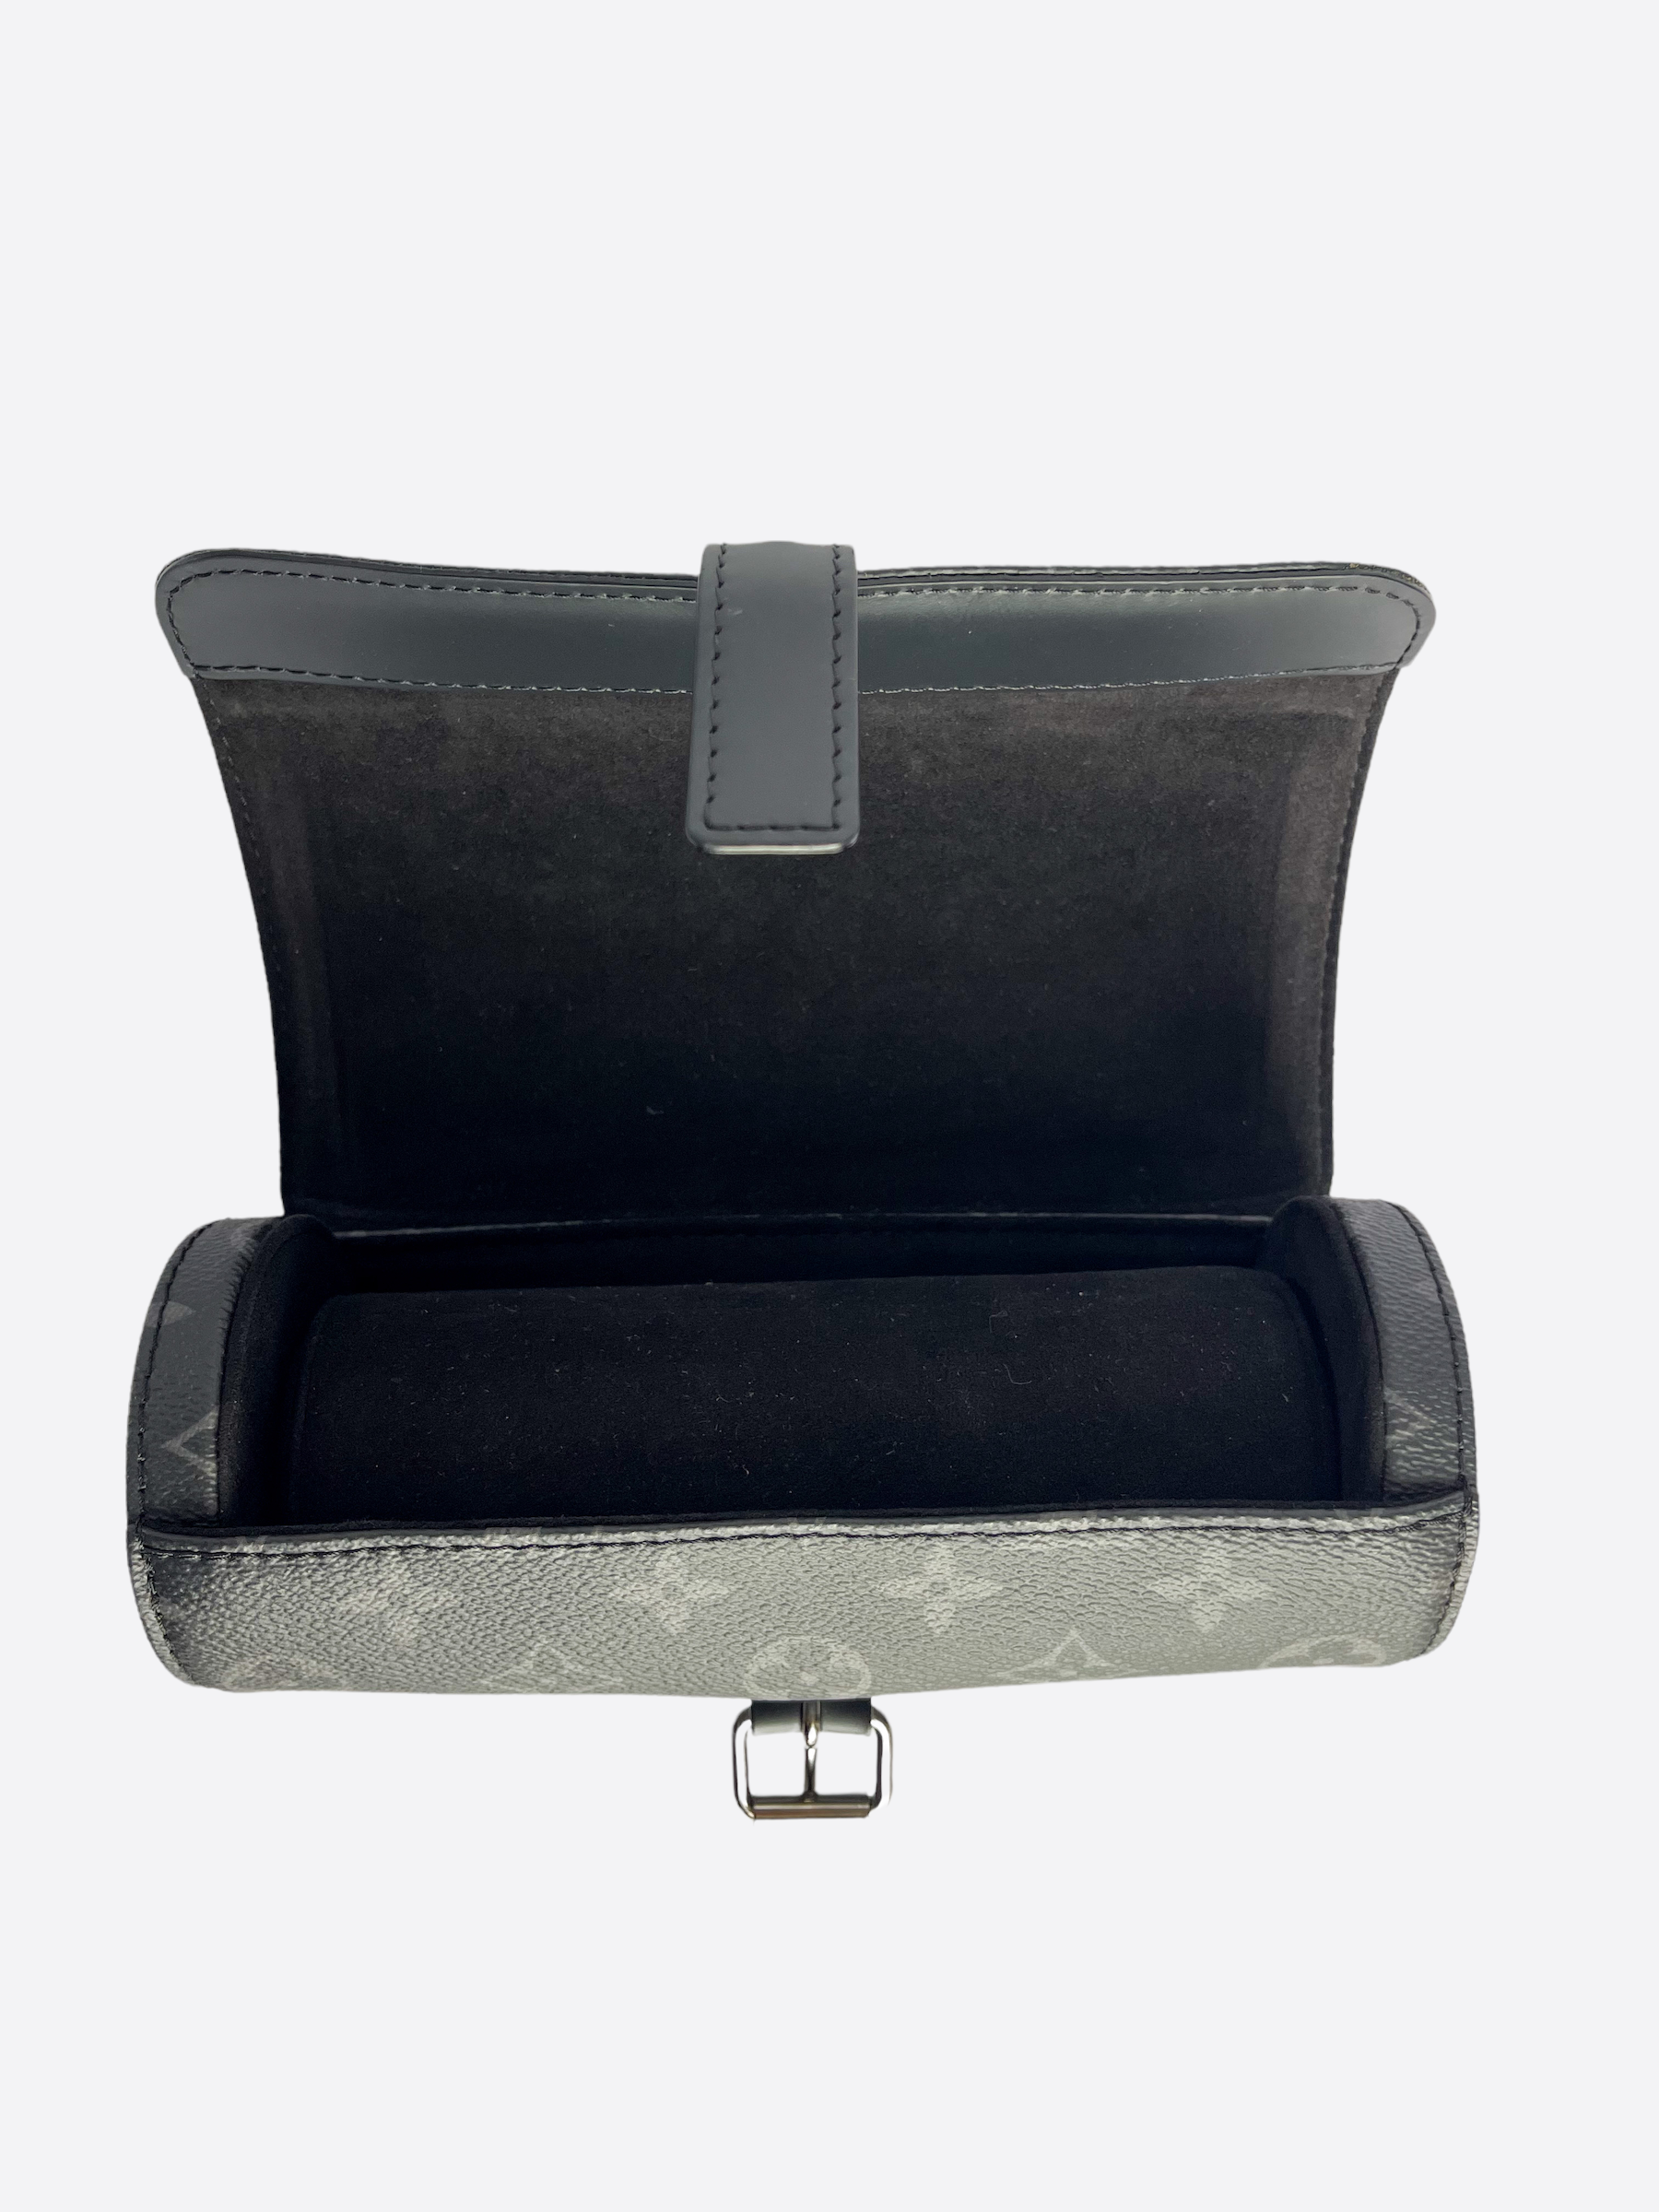 Louis Vuitton Watch Roll Case Review 